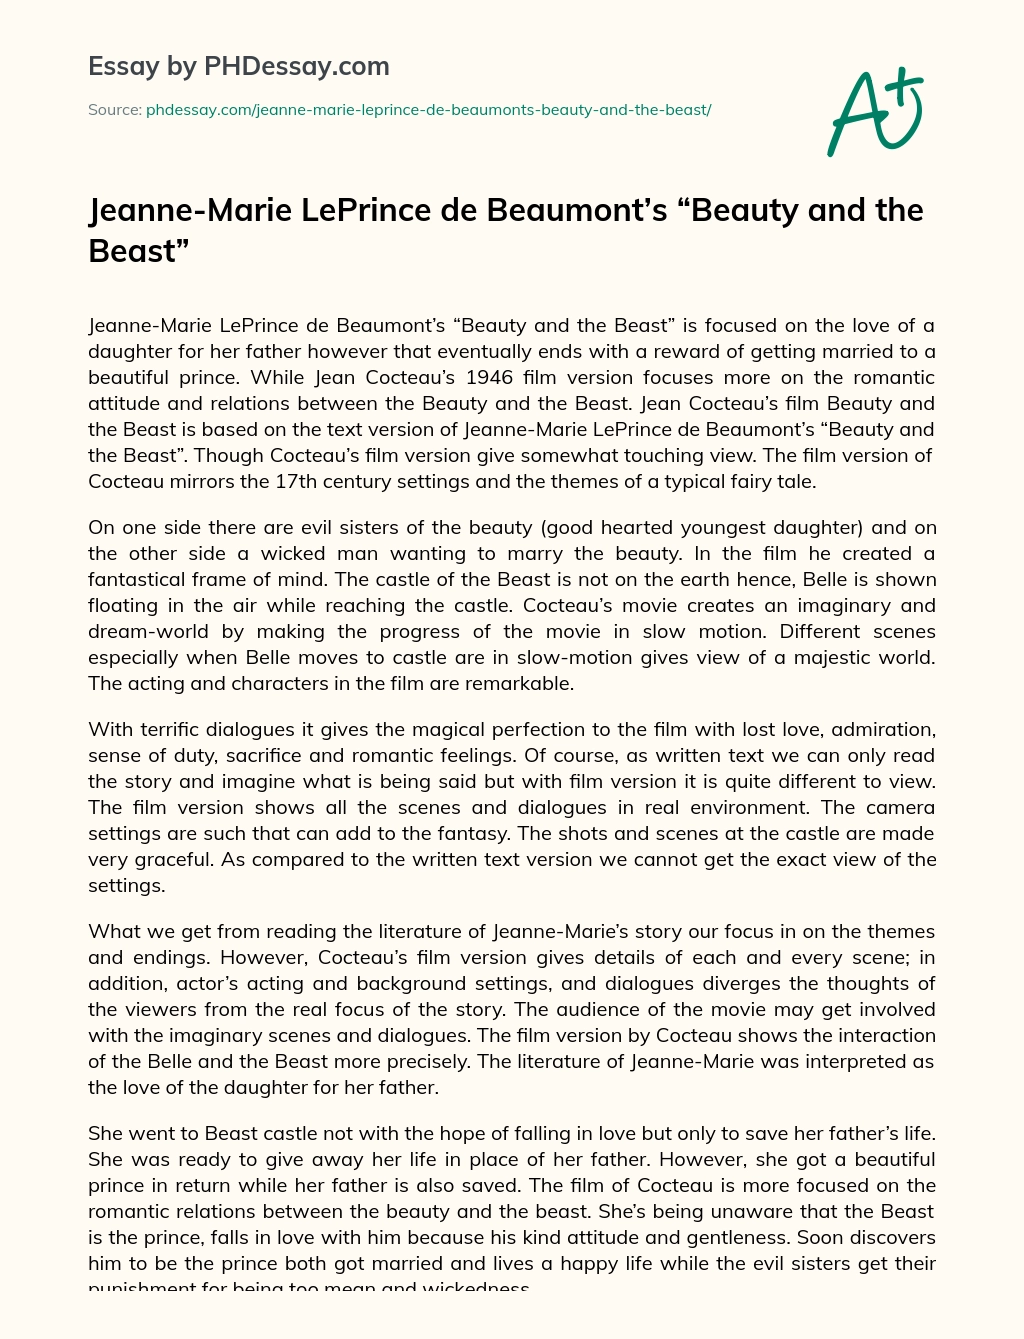 Jeanne-Marie LePrince de Beaumont’s “Beauty and the Beast” essay